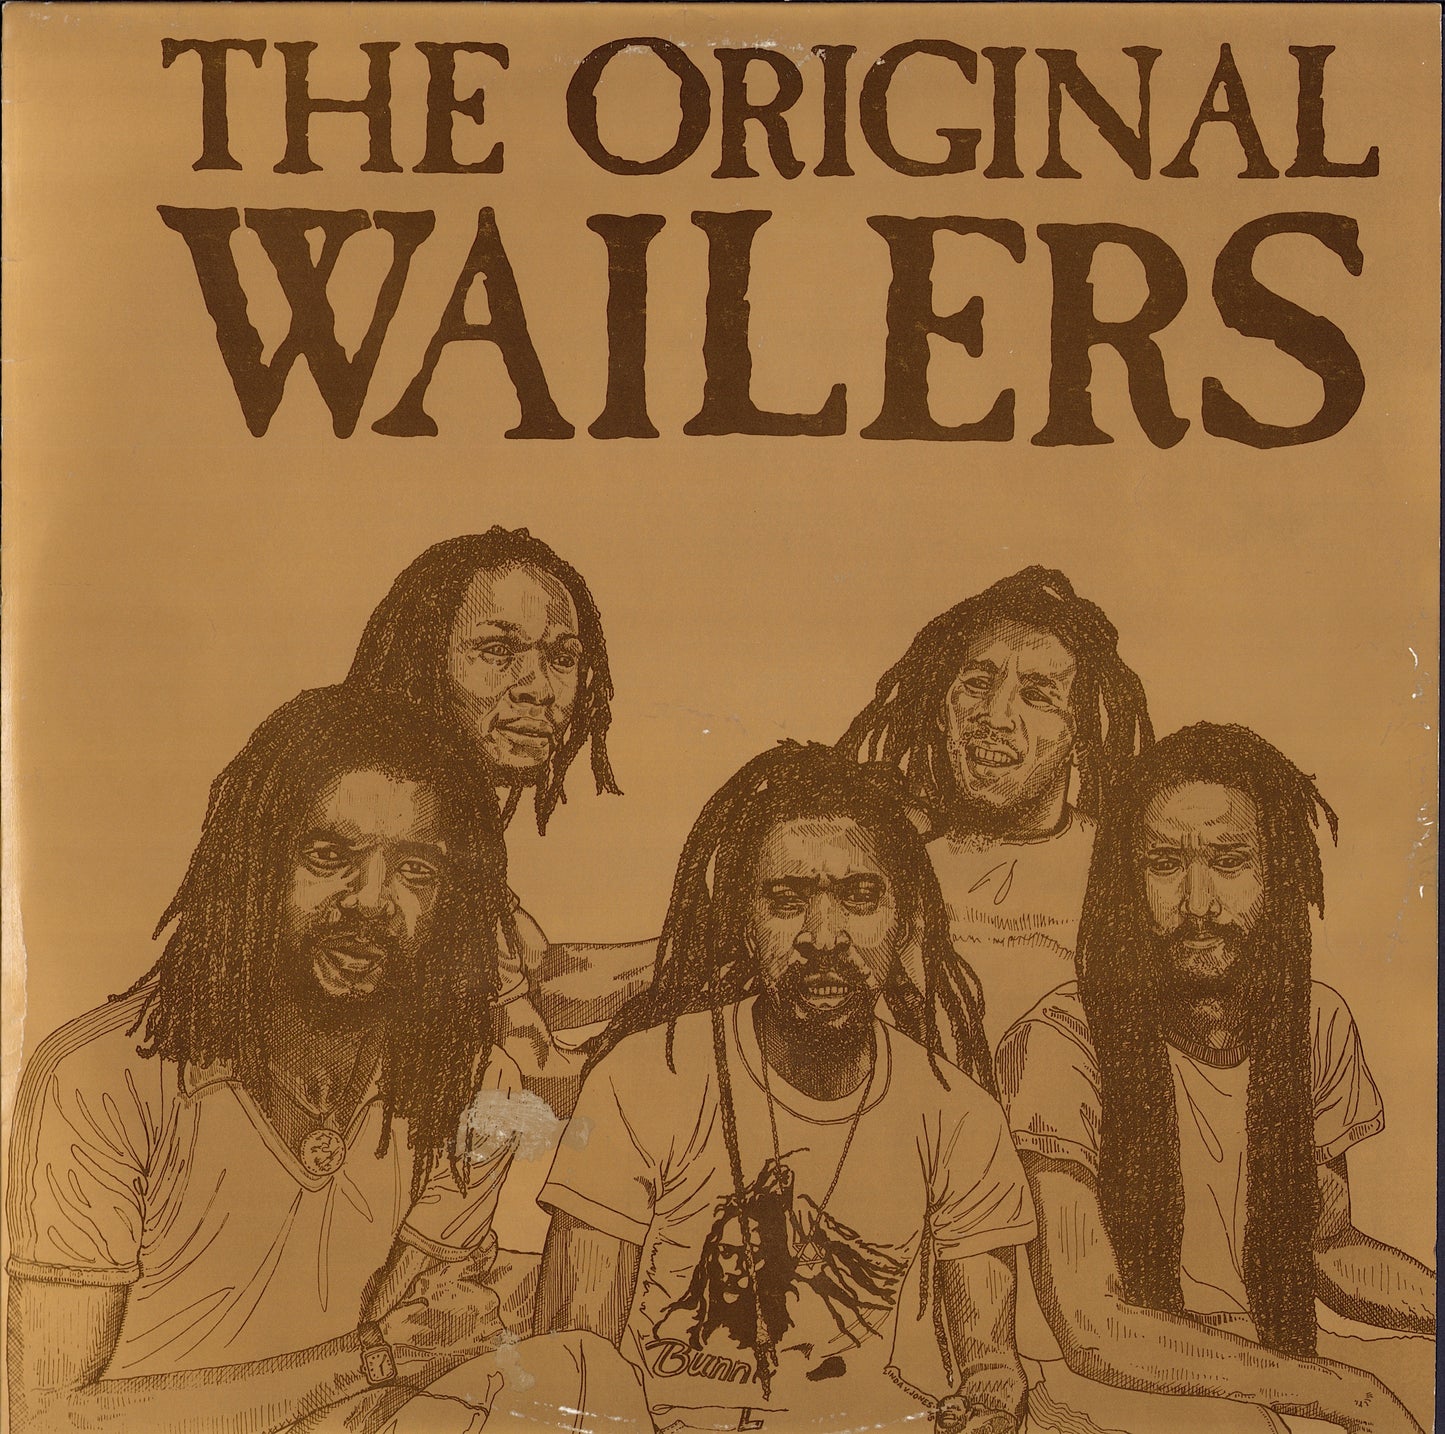 The Original Wailers - Music Lesson / Nice Time Vinyl 12" Maxi-Single